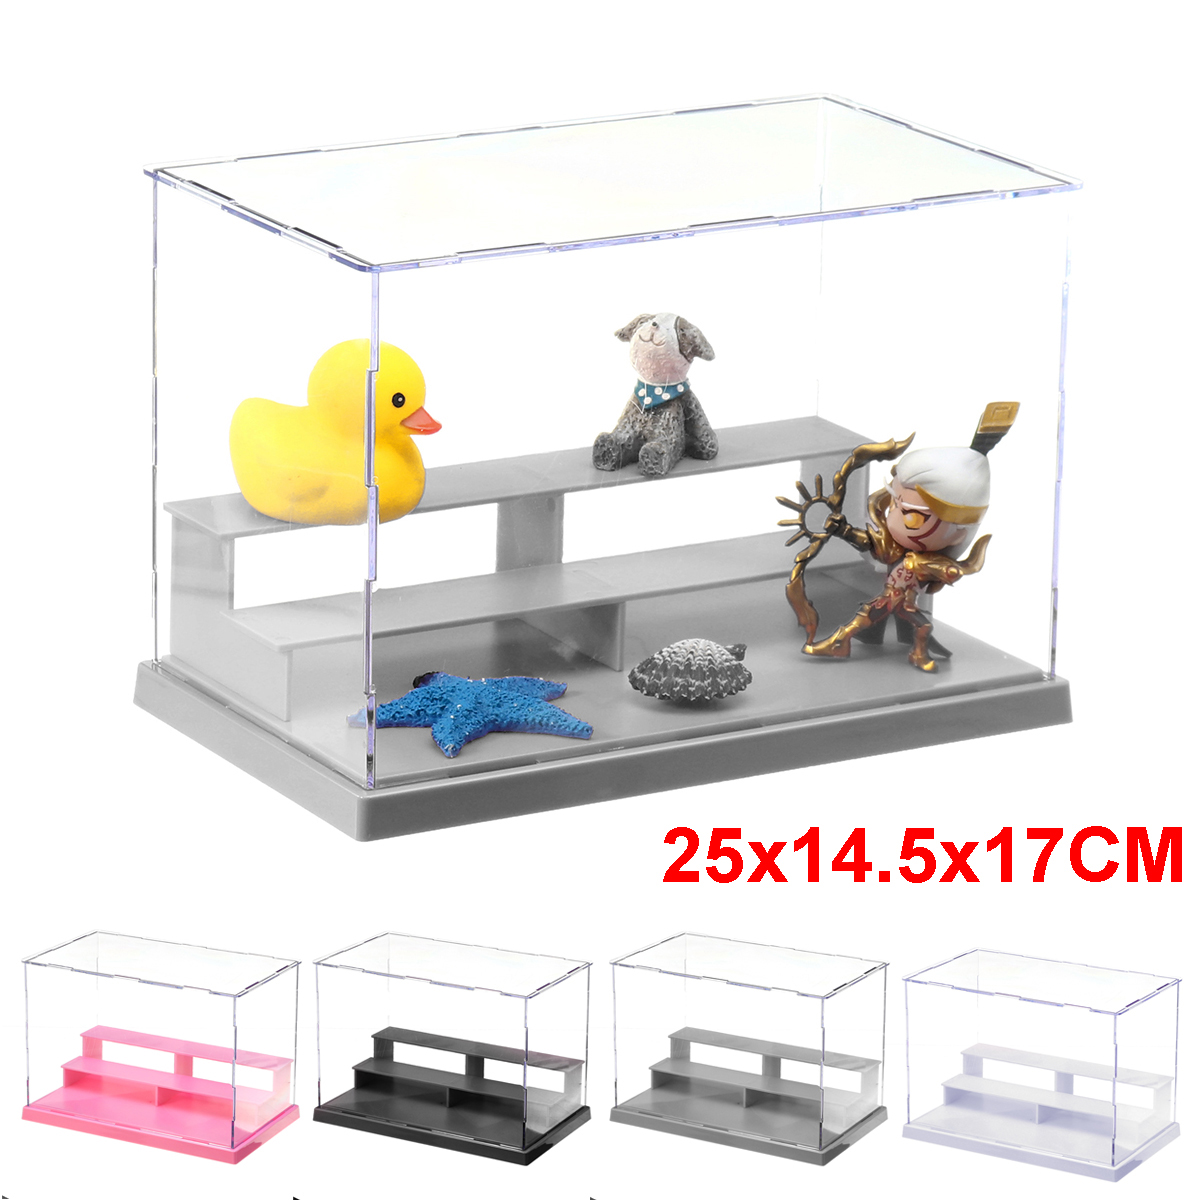 Acrylic-Action-Figures-Model-Transparent-Display-Case-Toy-DIY-Assembling-Storage-Box-Car-Ship-Collec-1729238-2